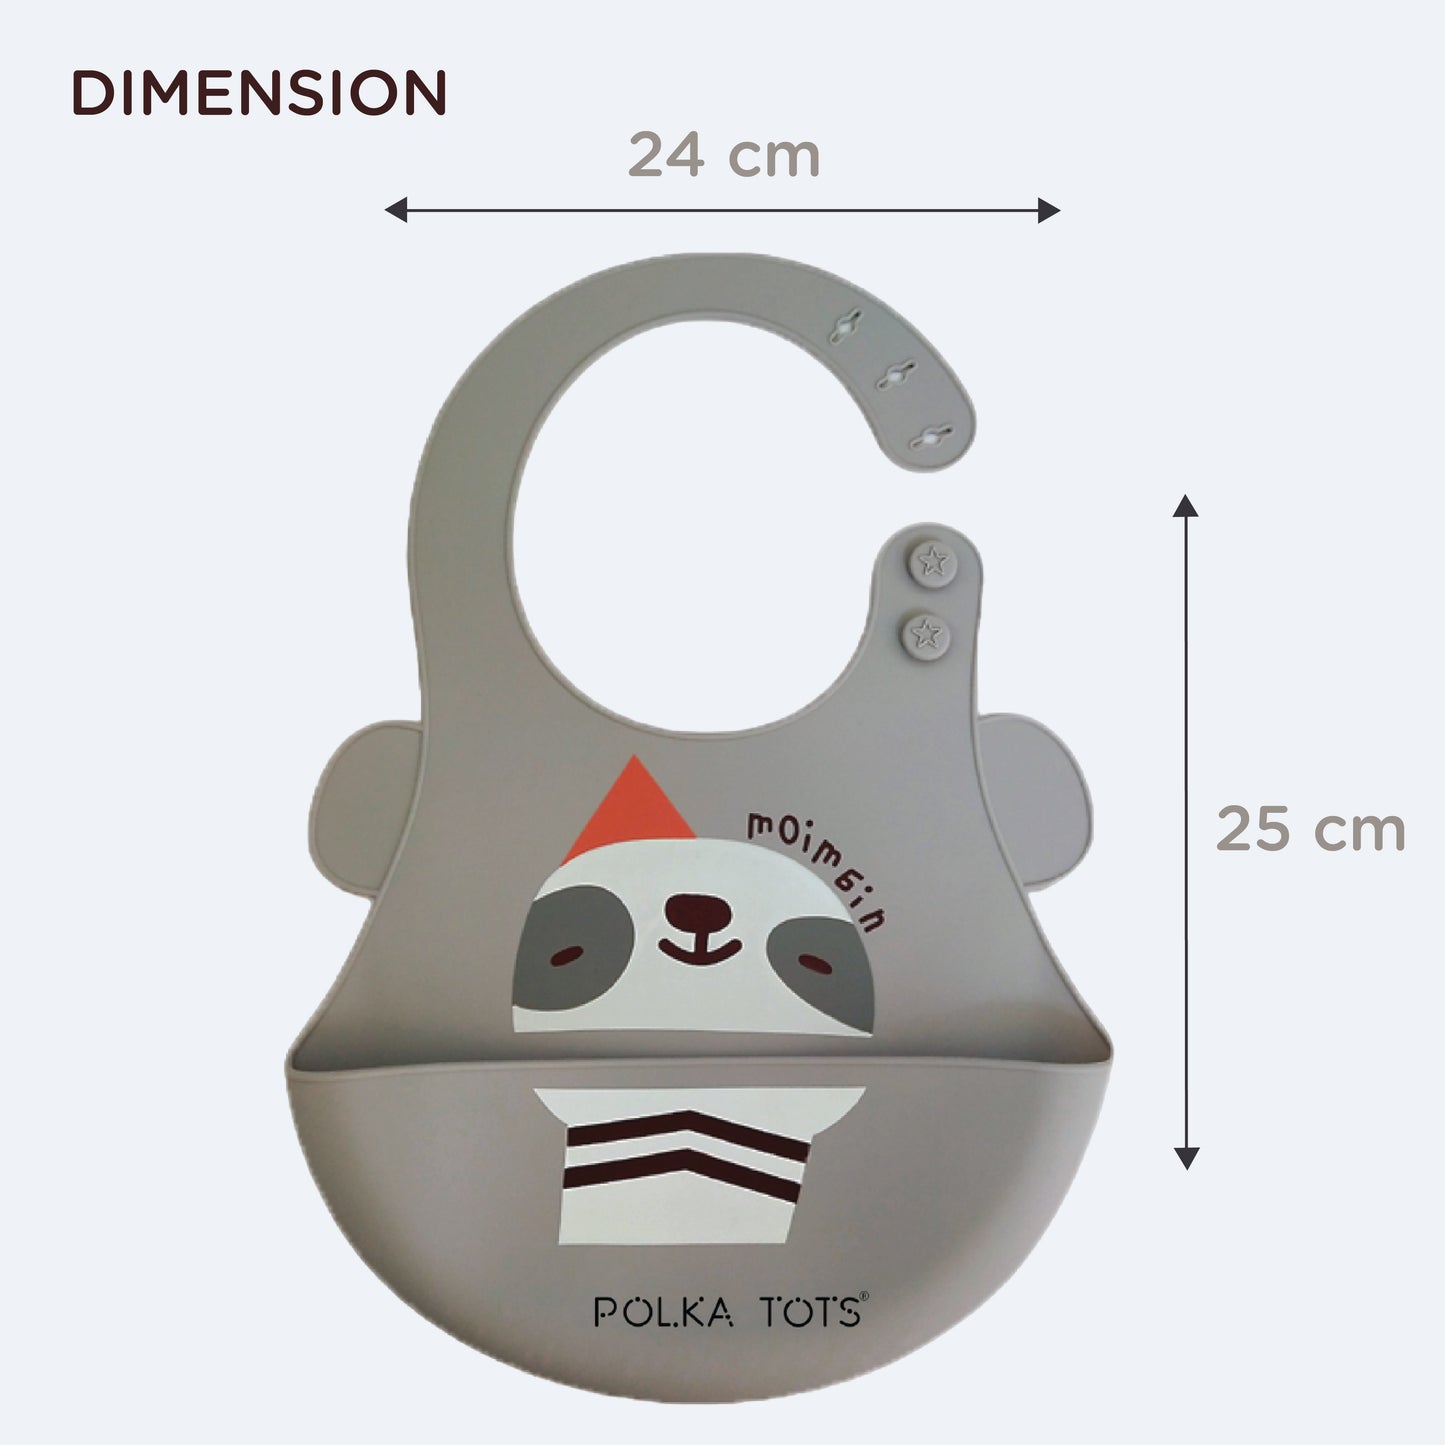 Polka Tots Waterproof Silicone Bibs with Pocket and Adjustable Snaps (Grey Sloth)